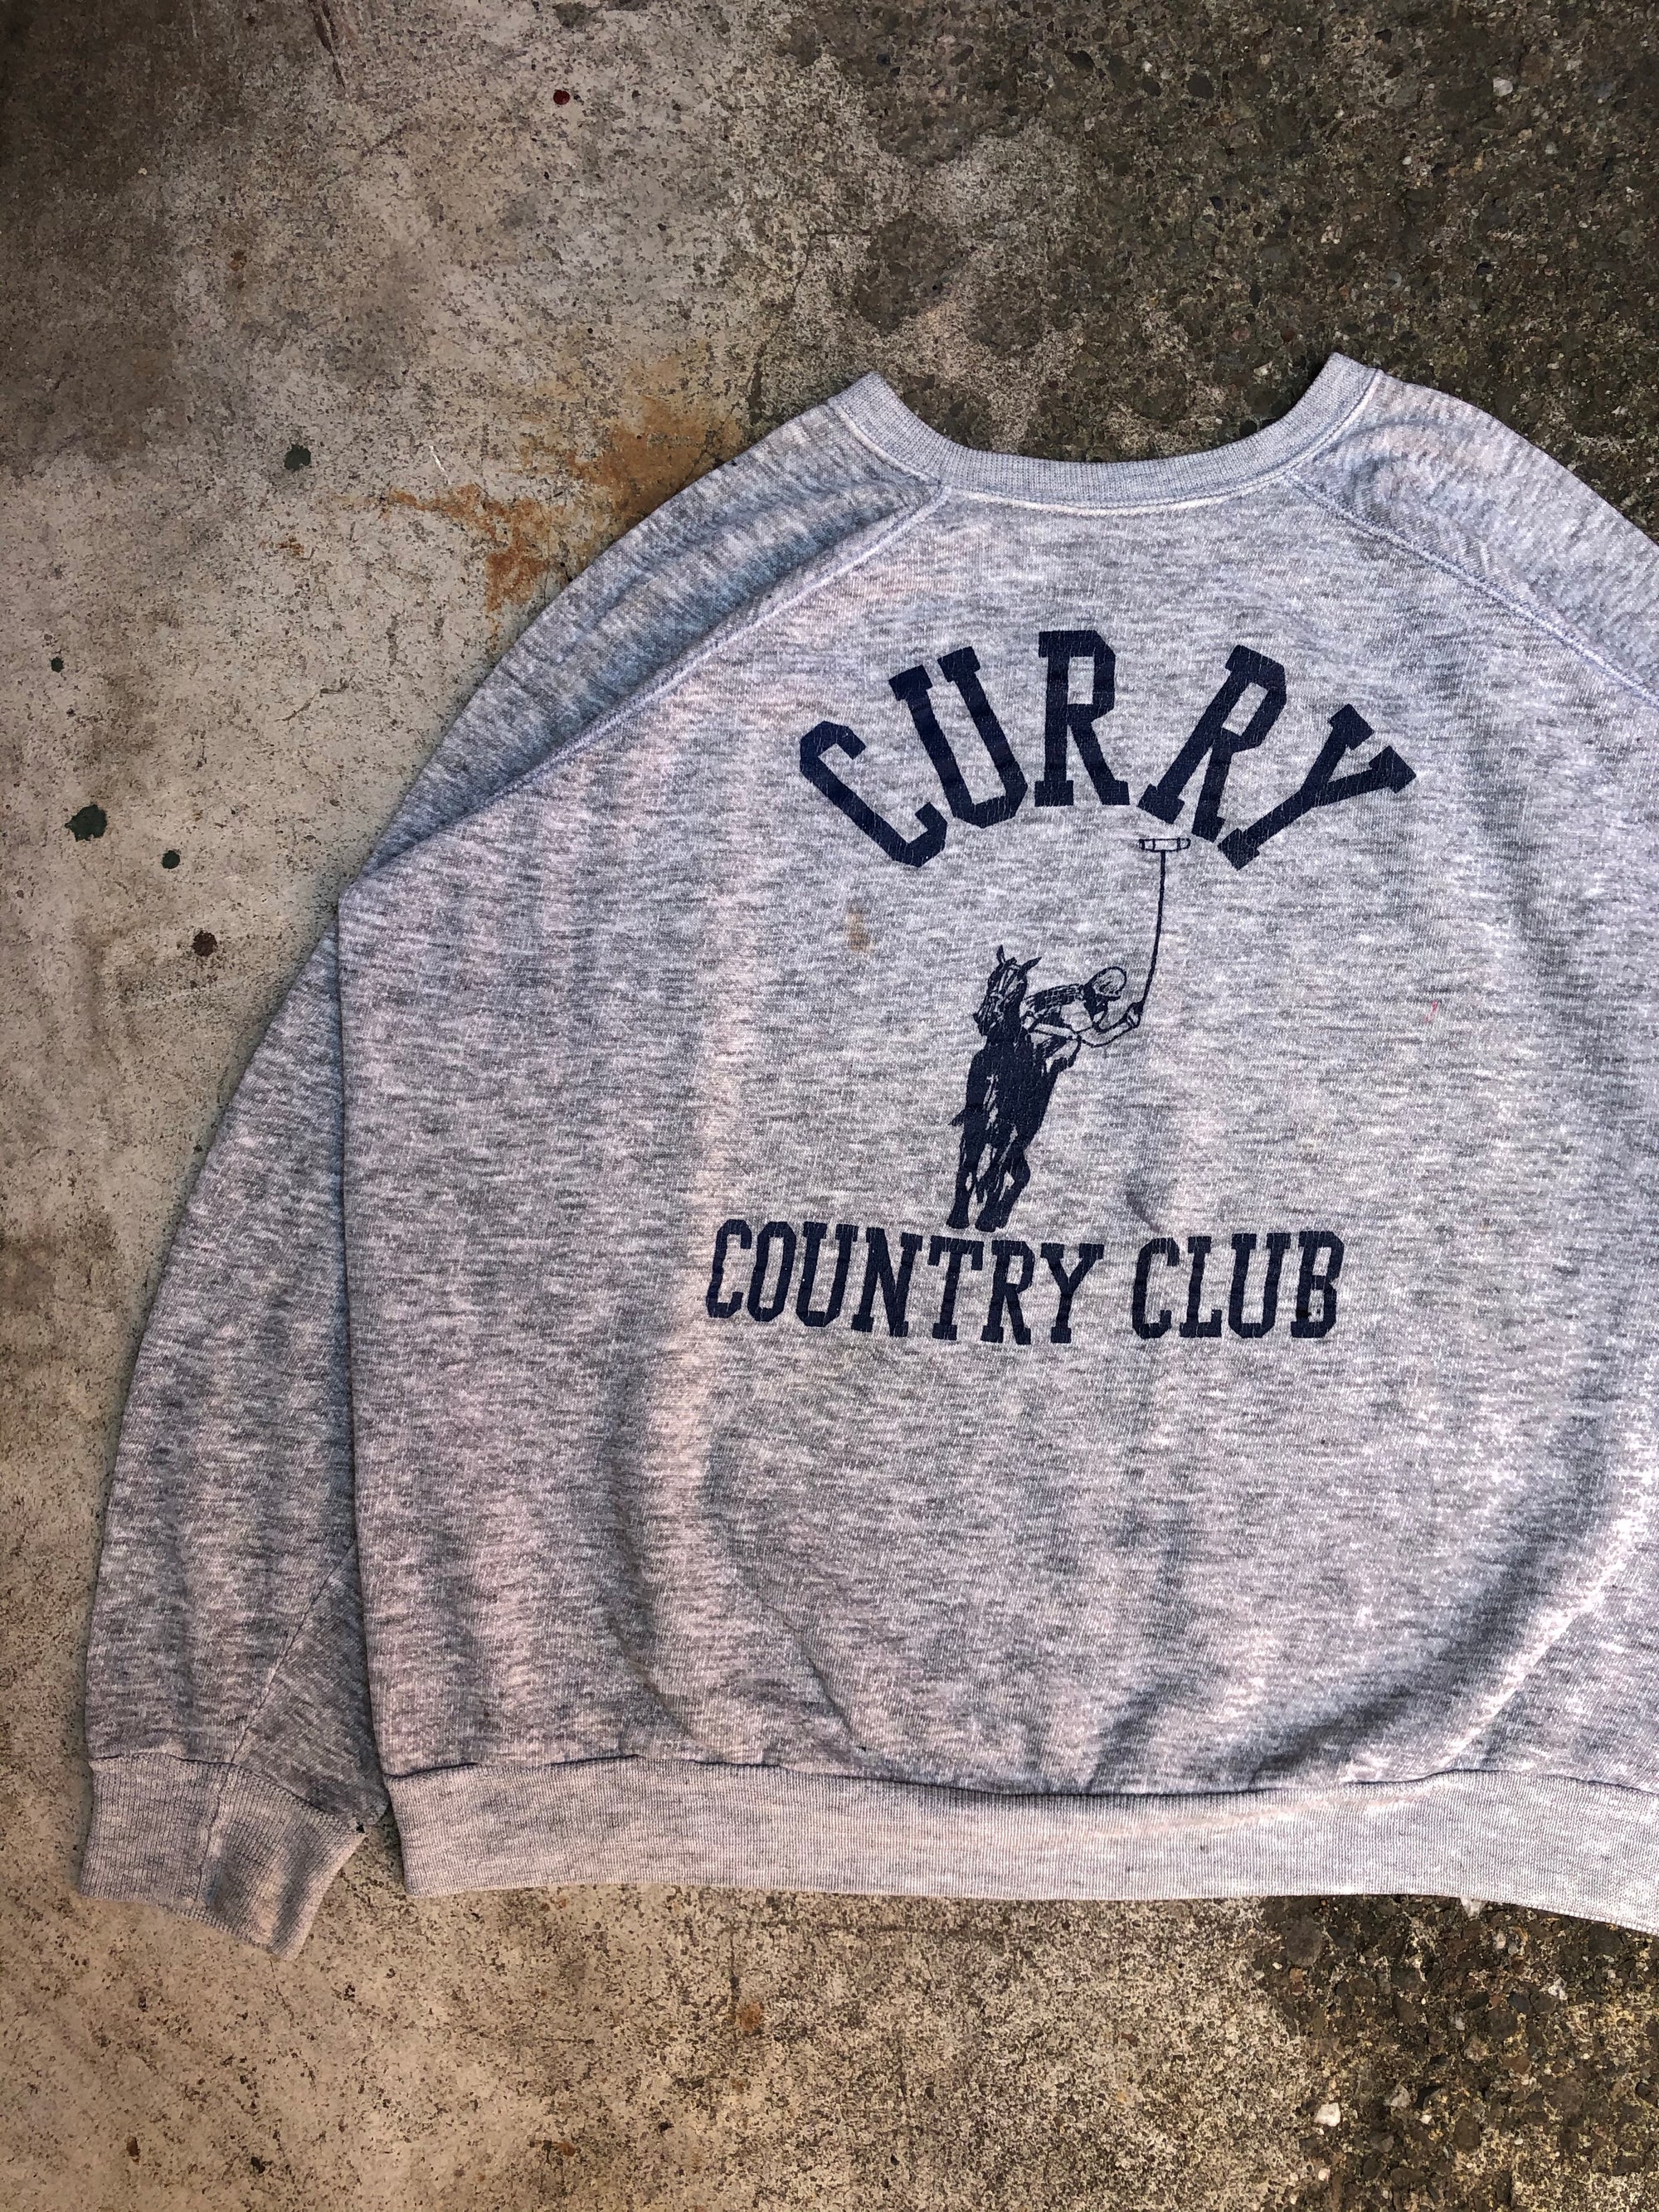 1980s Heather Grey “Curry Country Club” Raglan Sweatshirt